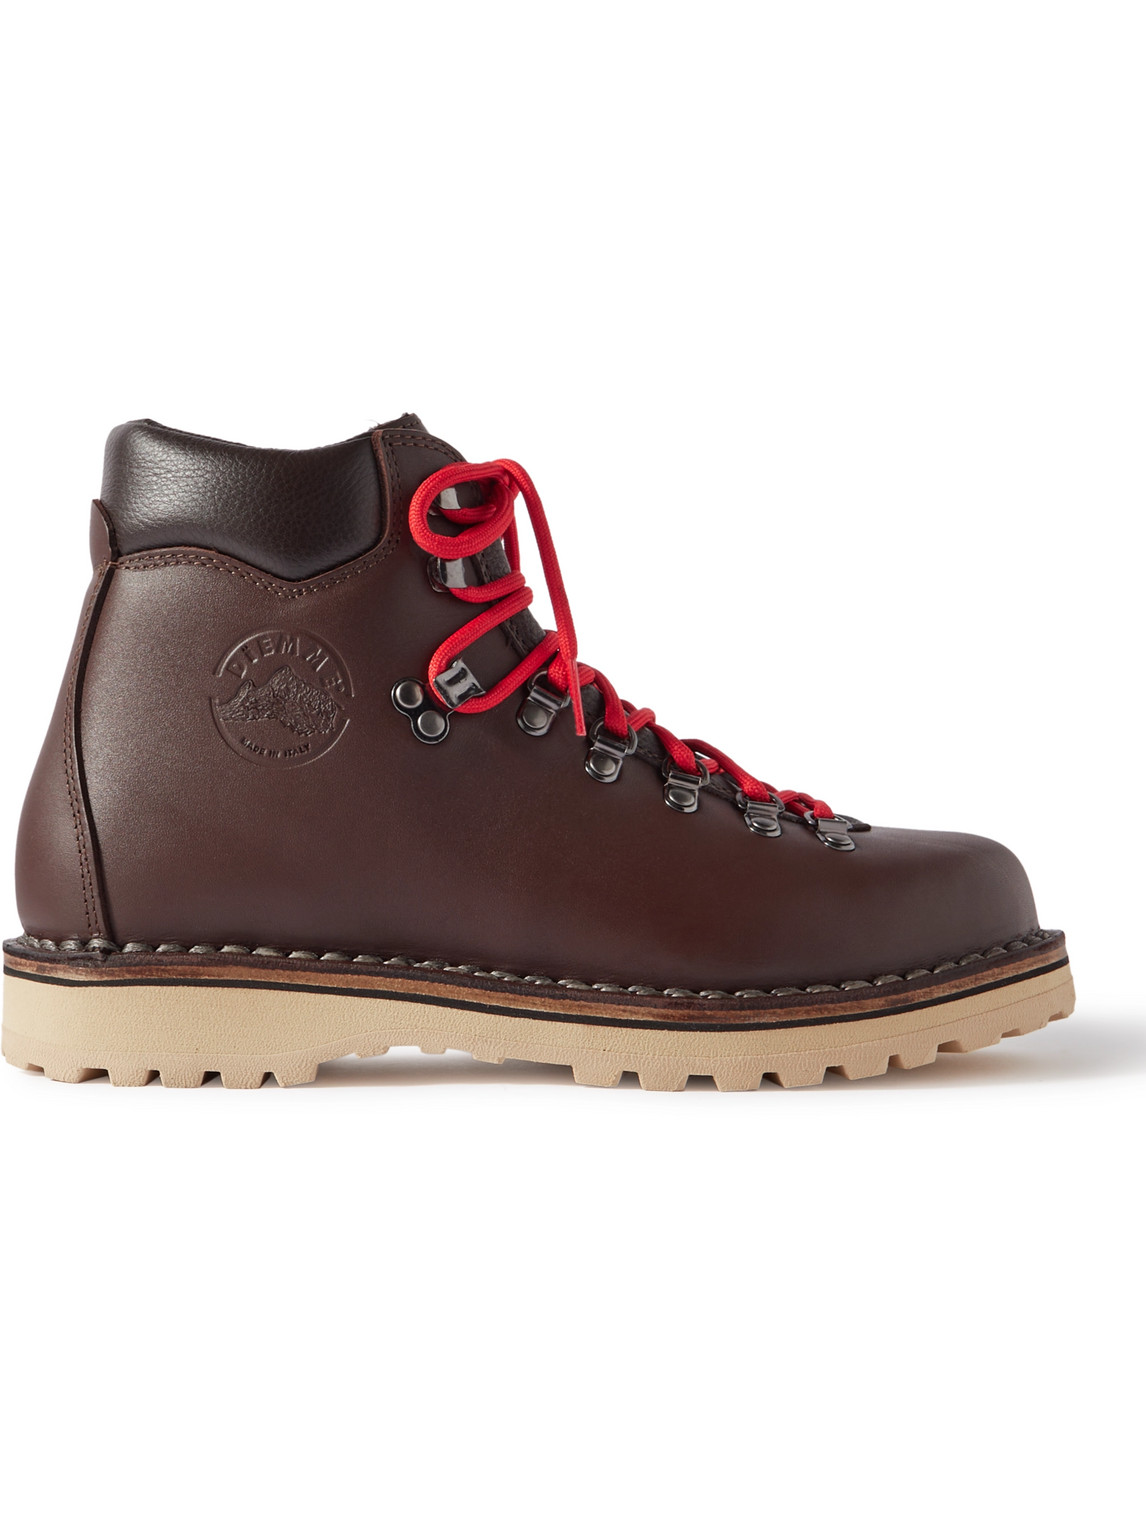 Diemme - Roccia Vet Leather Hiking Boots - Men - Brown - EU 41 von Diemme